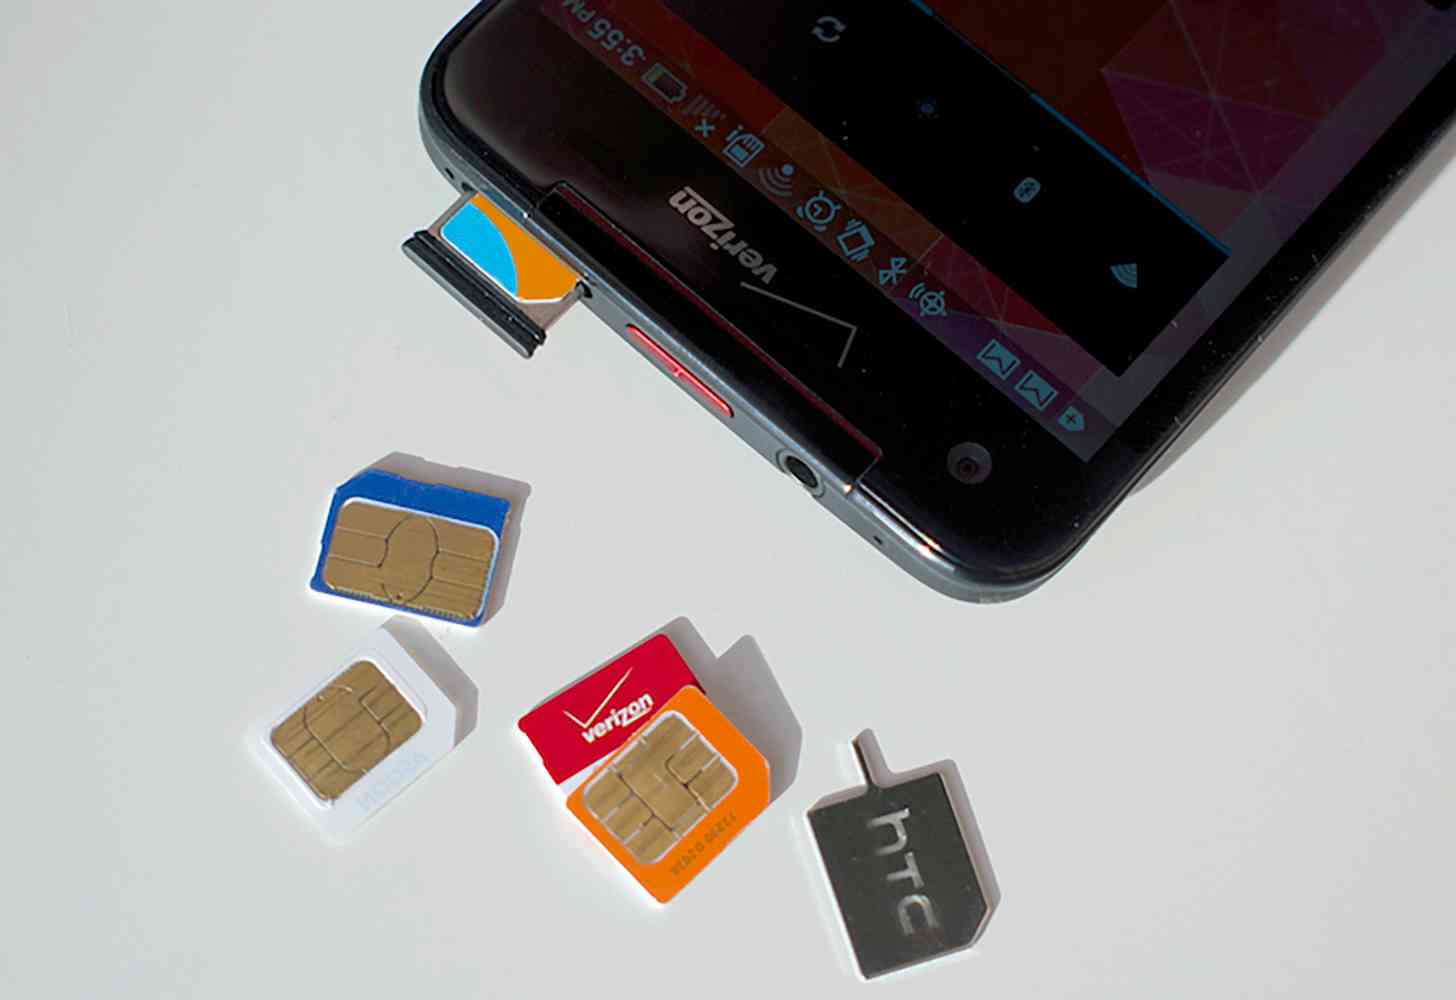 AT&T, Verizon SIM cards HTC DROID DNA